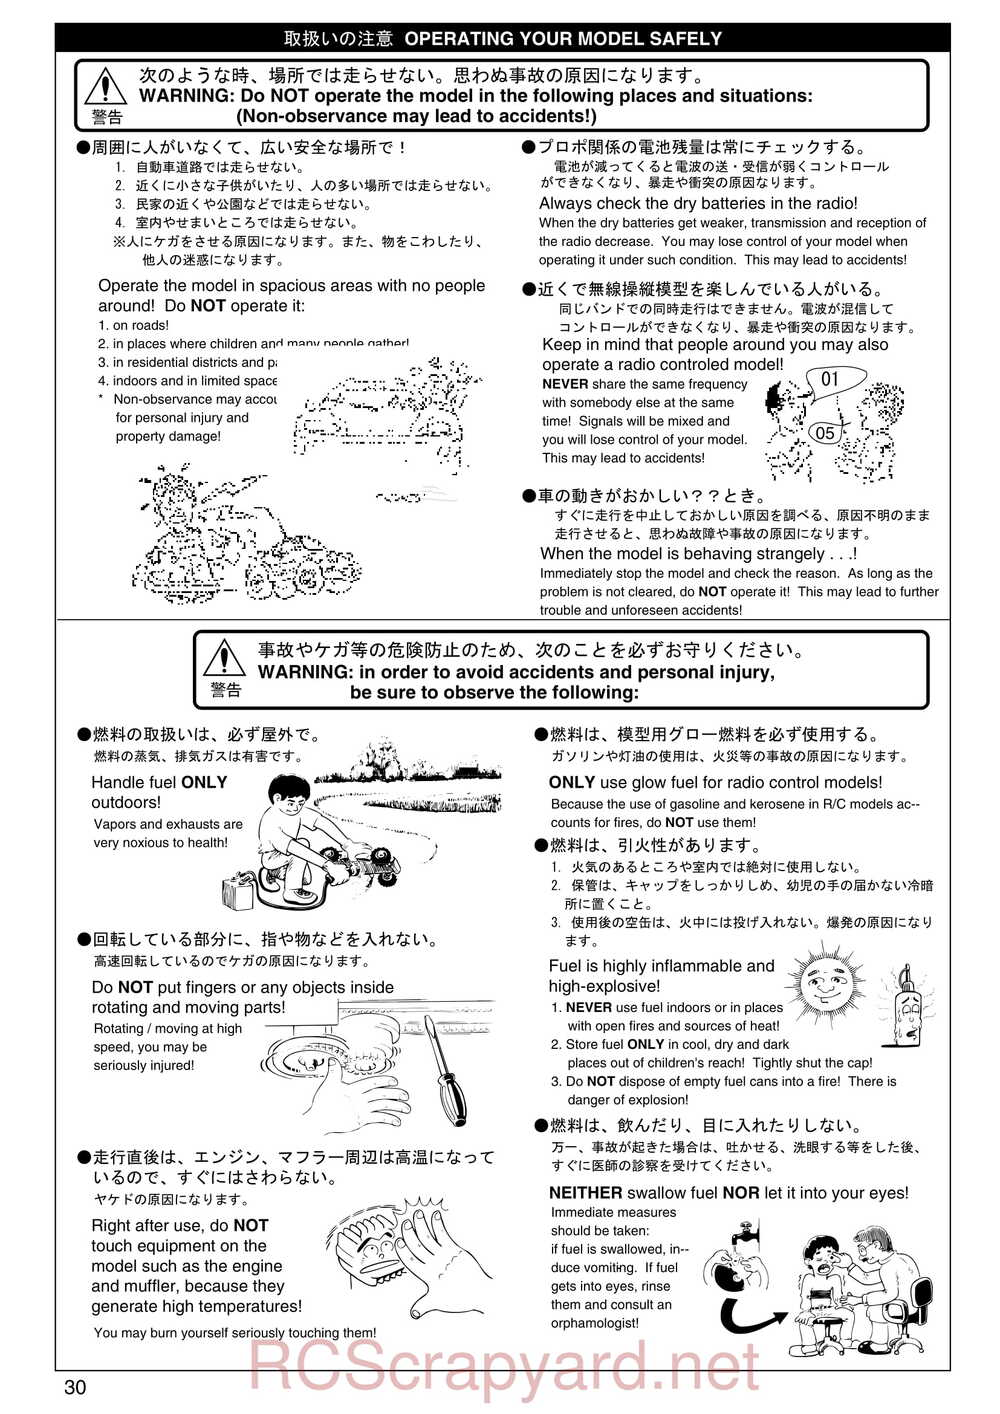 Kyosho - 31271 - Inferno-MP-7-5-Yuichi 2 - Manual - Page 30